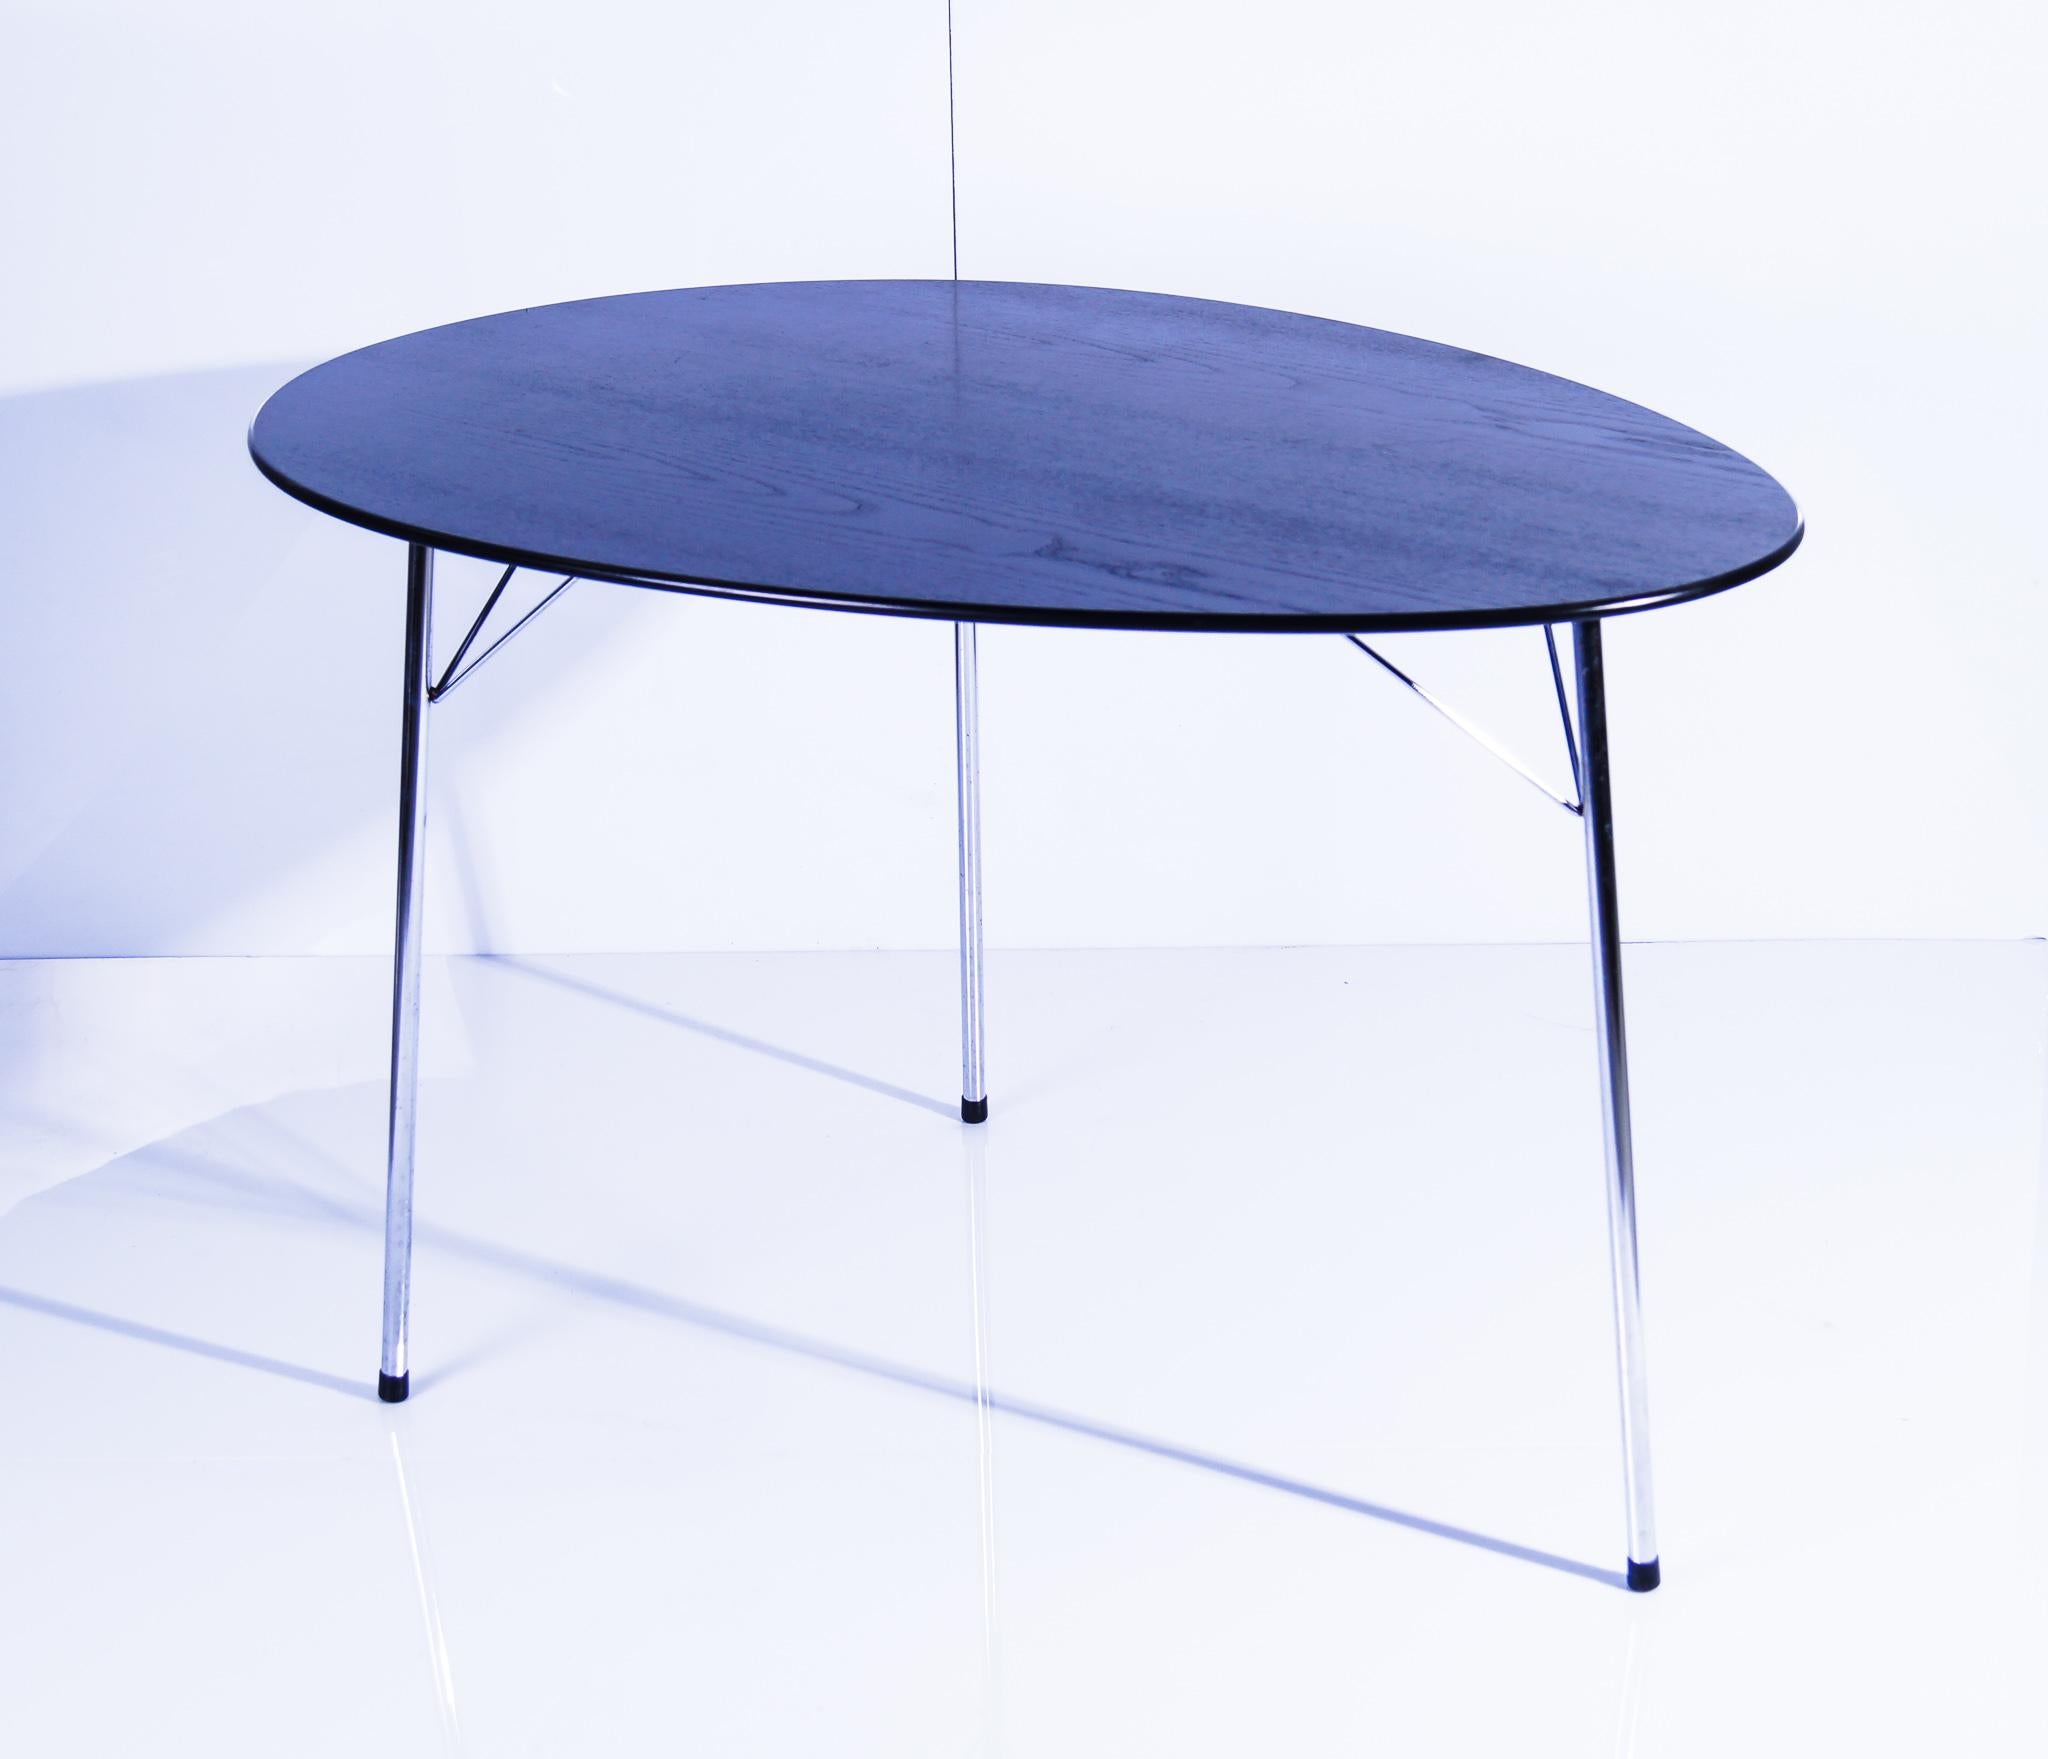 Arne Jacobsen 1902-1971. Oval tapered-shaped table, model 3603.
 

Arne Jacobsen. Table with oval tapered-shaped black lacquered ash top, three steel legs. H. 70, L. 115, W. 84 cm. Model 3603. Designed in 1952-53. Literature: Carsten Thau & Kjeld